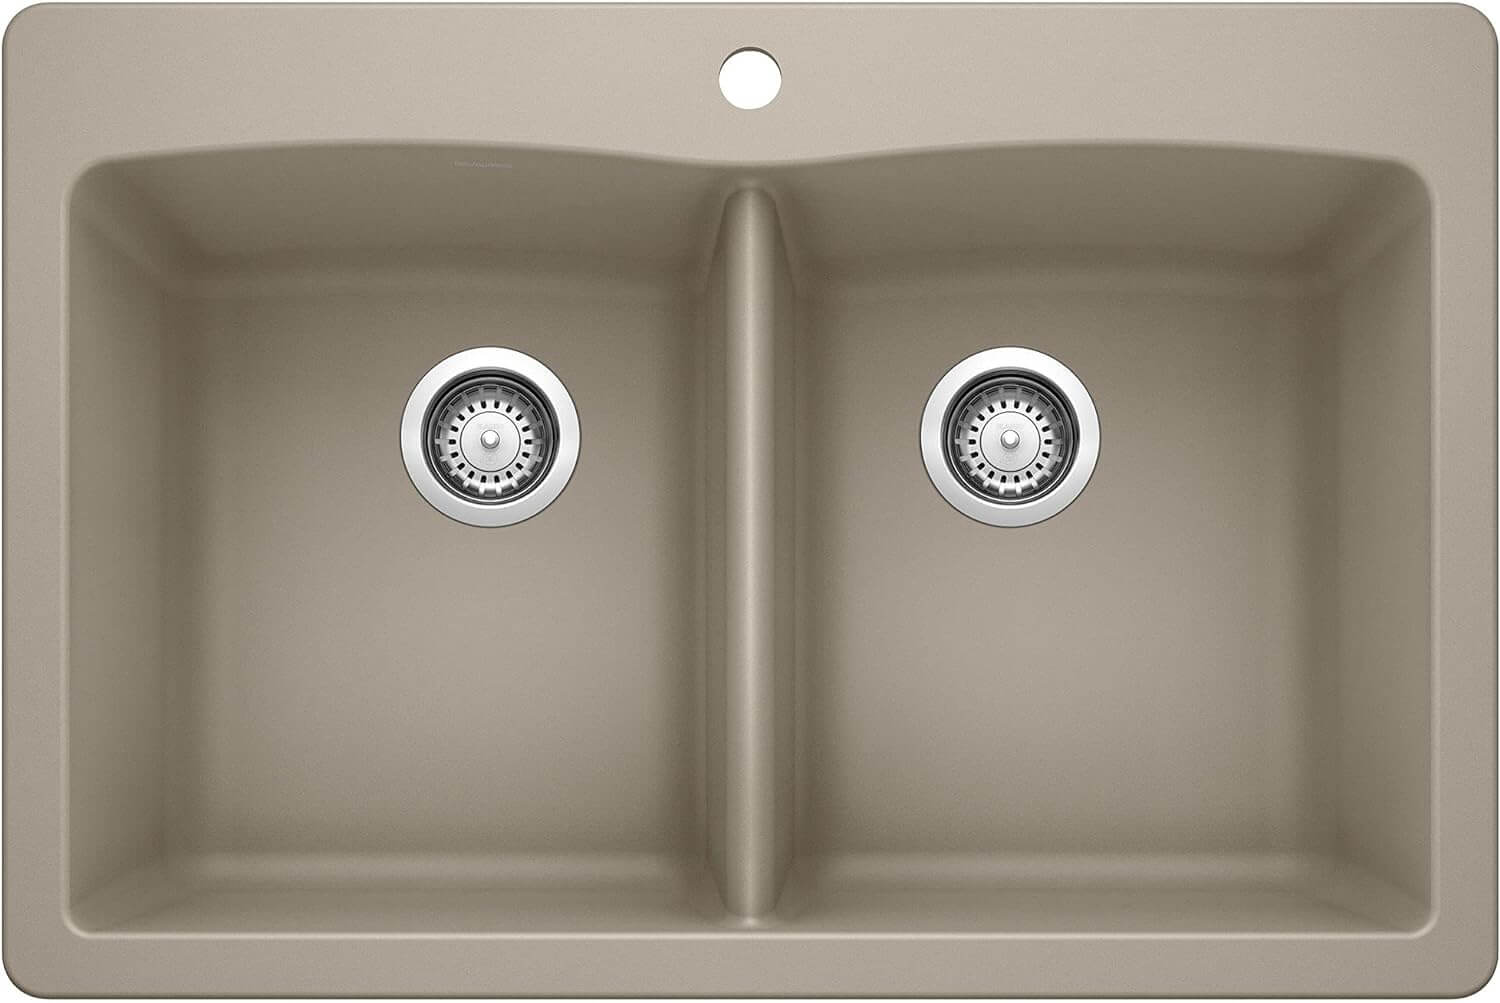  Blanco Diamond Double Basin Drop-In Granite Kitchen Sink